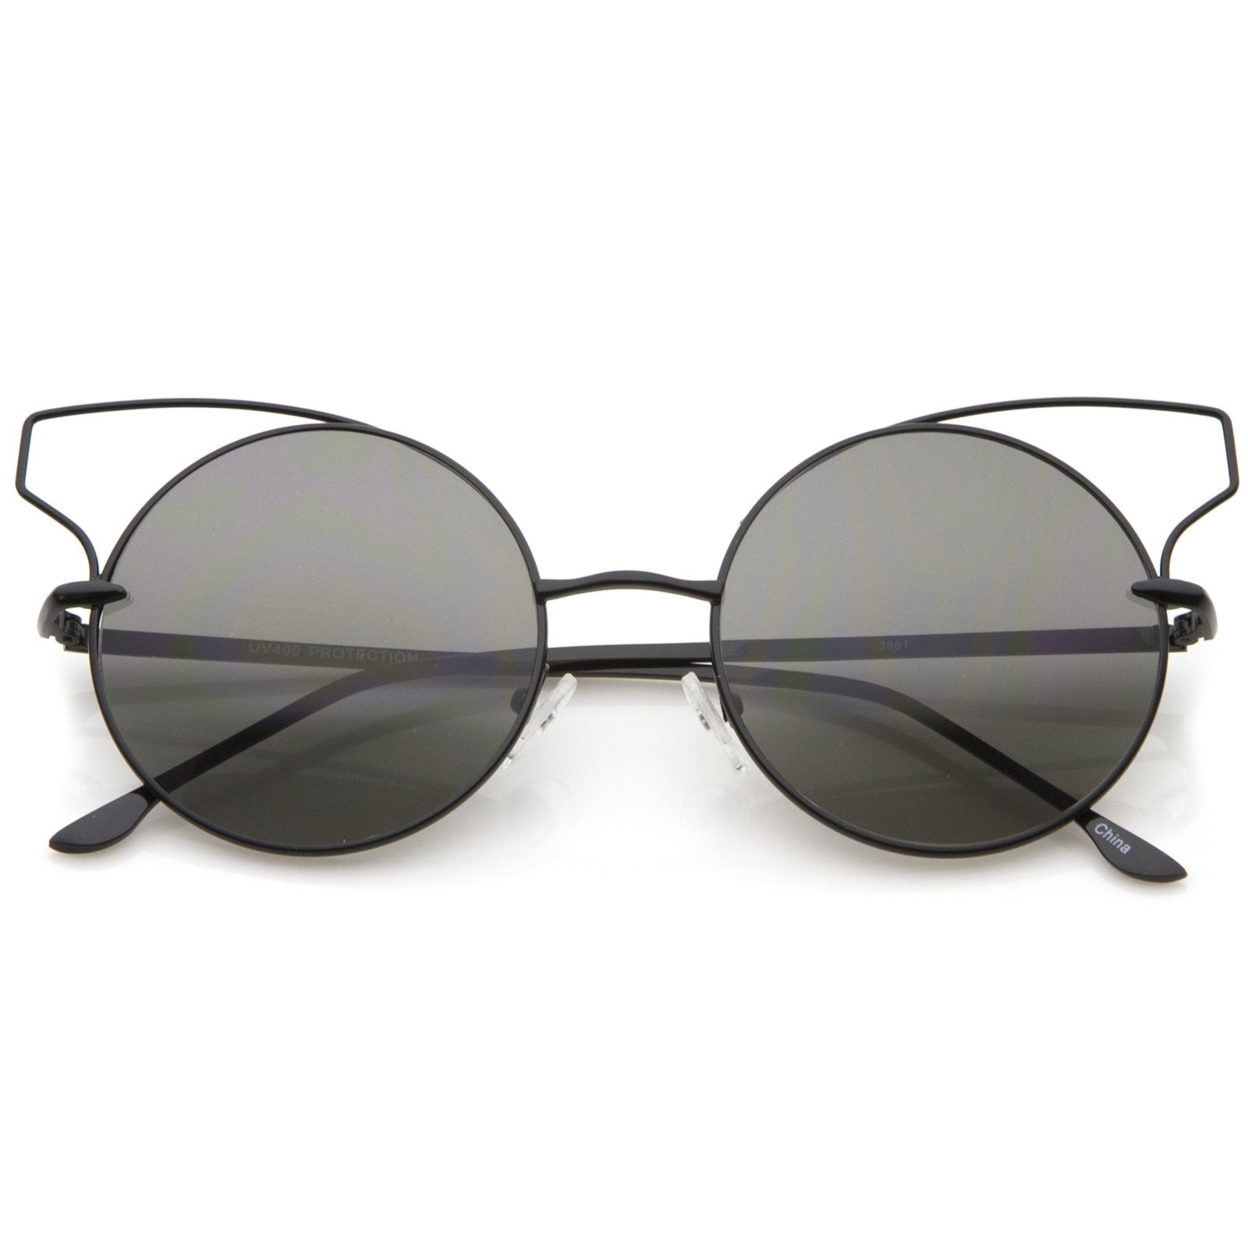 Women's Full Metal Open Design Frame Round Cat Eye Sunglasses 55mm - Silver / Smoke